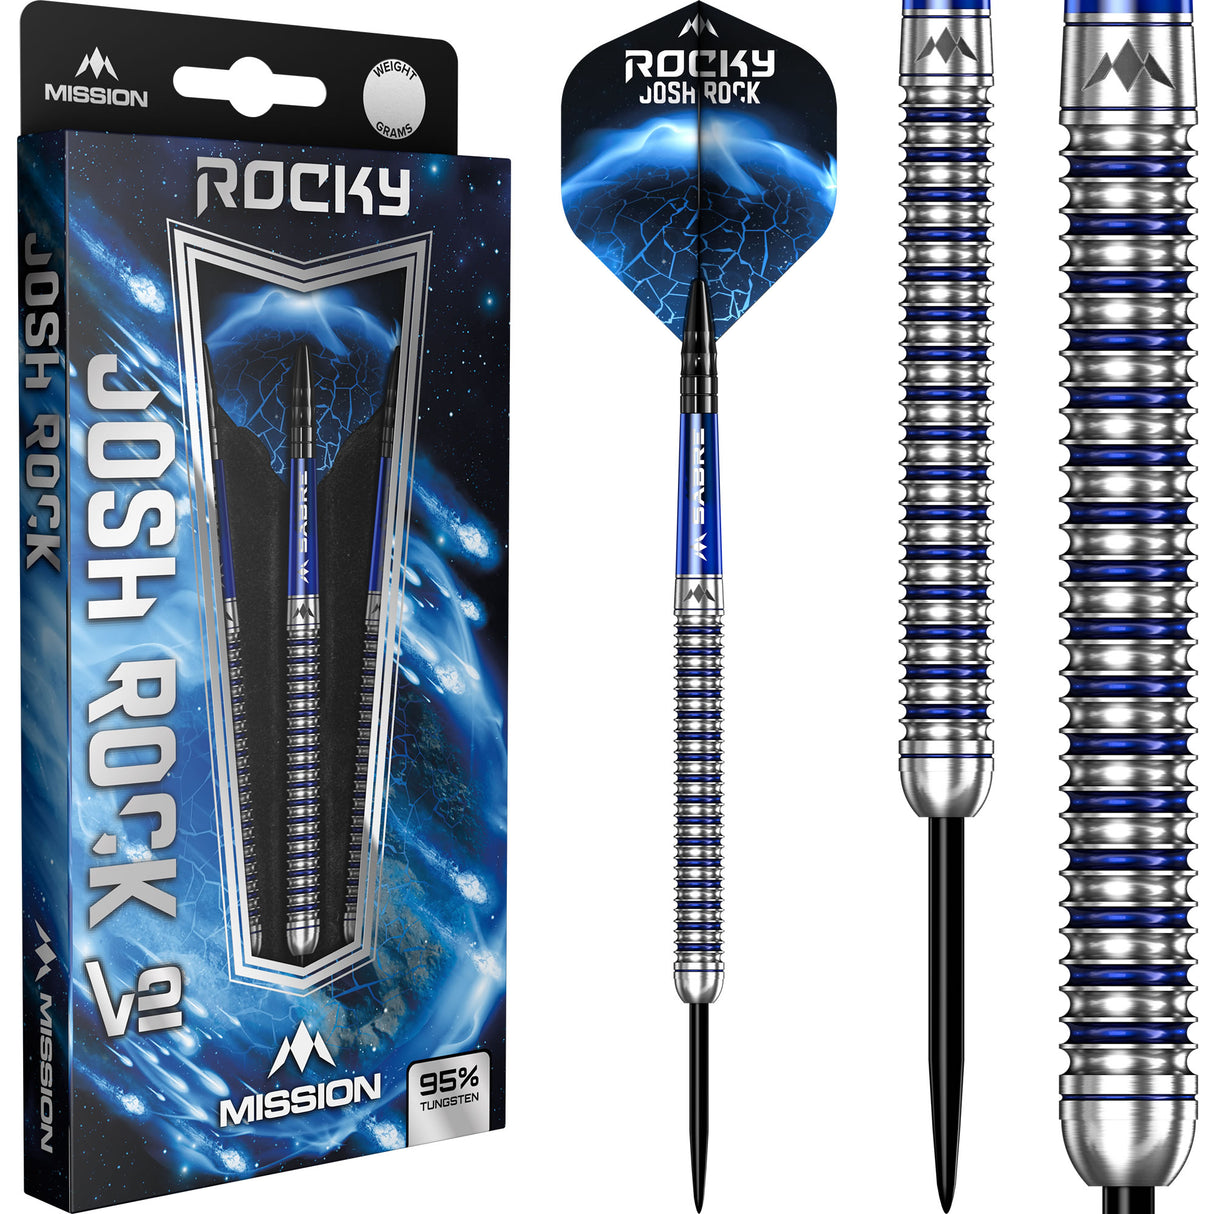 Mission Josh Rock Darts v2 - Steel Tip - 95% - Rocky - Silver & Blue PVD